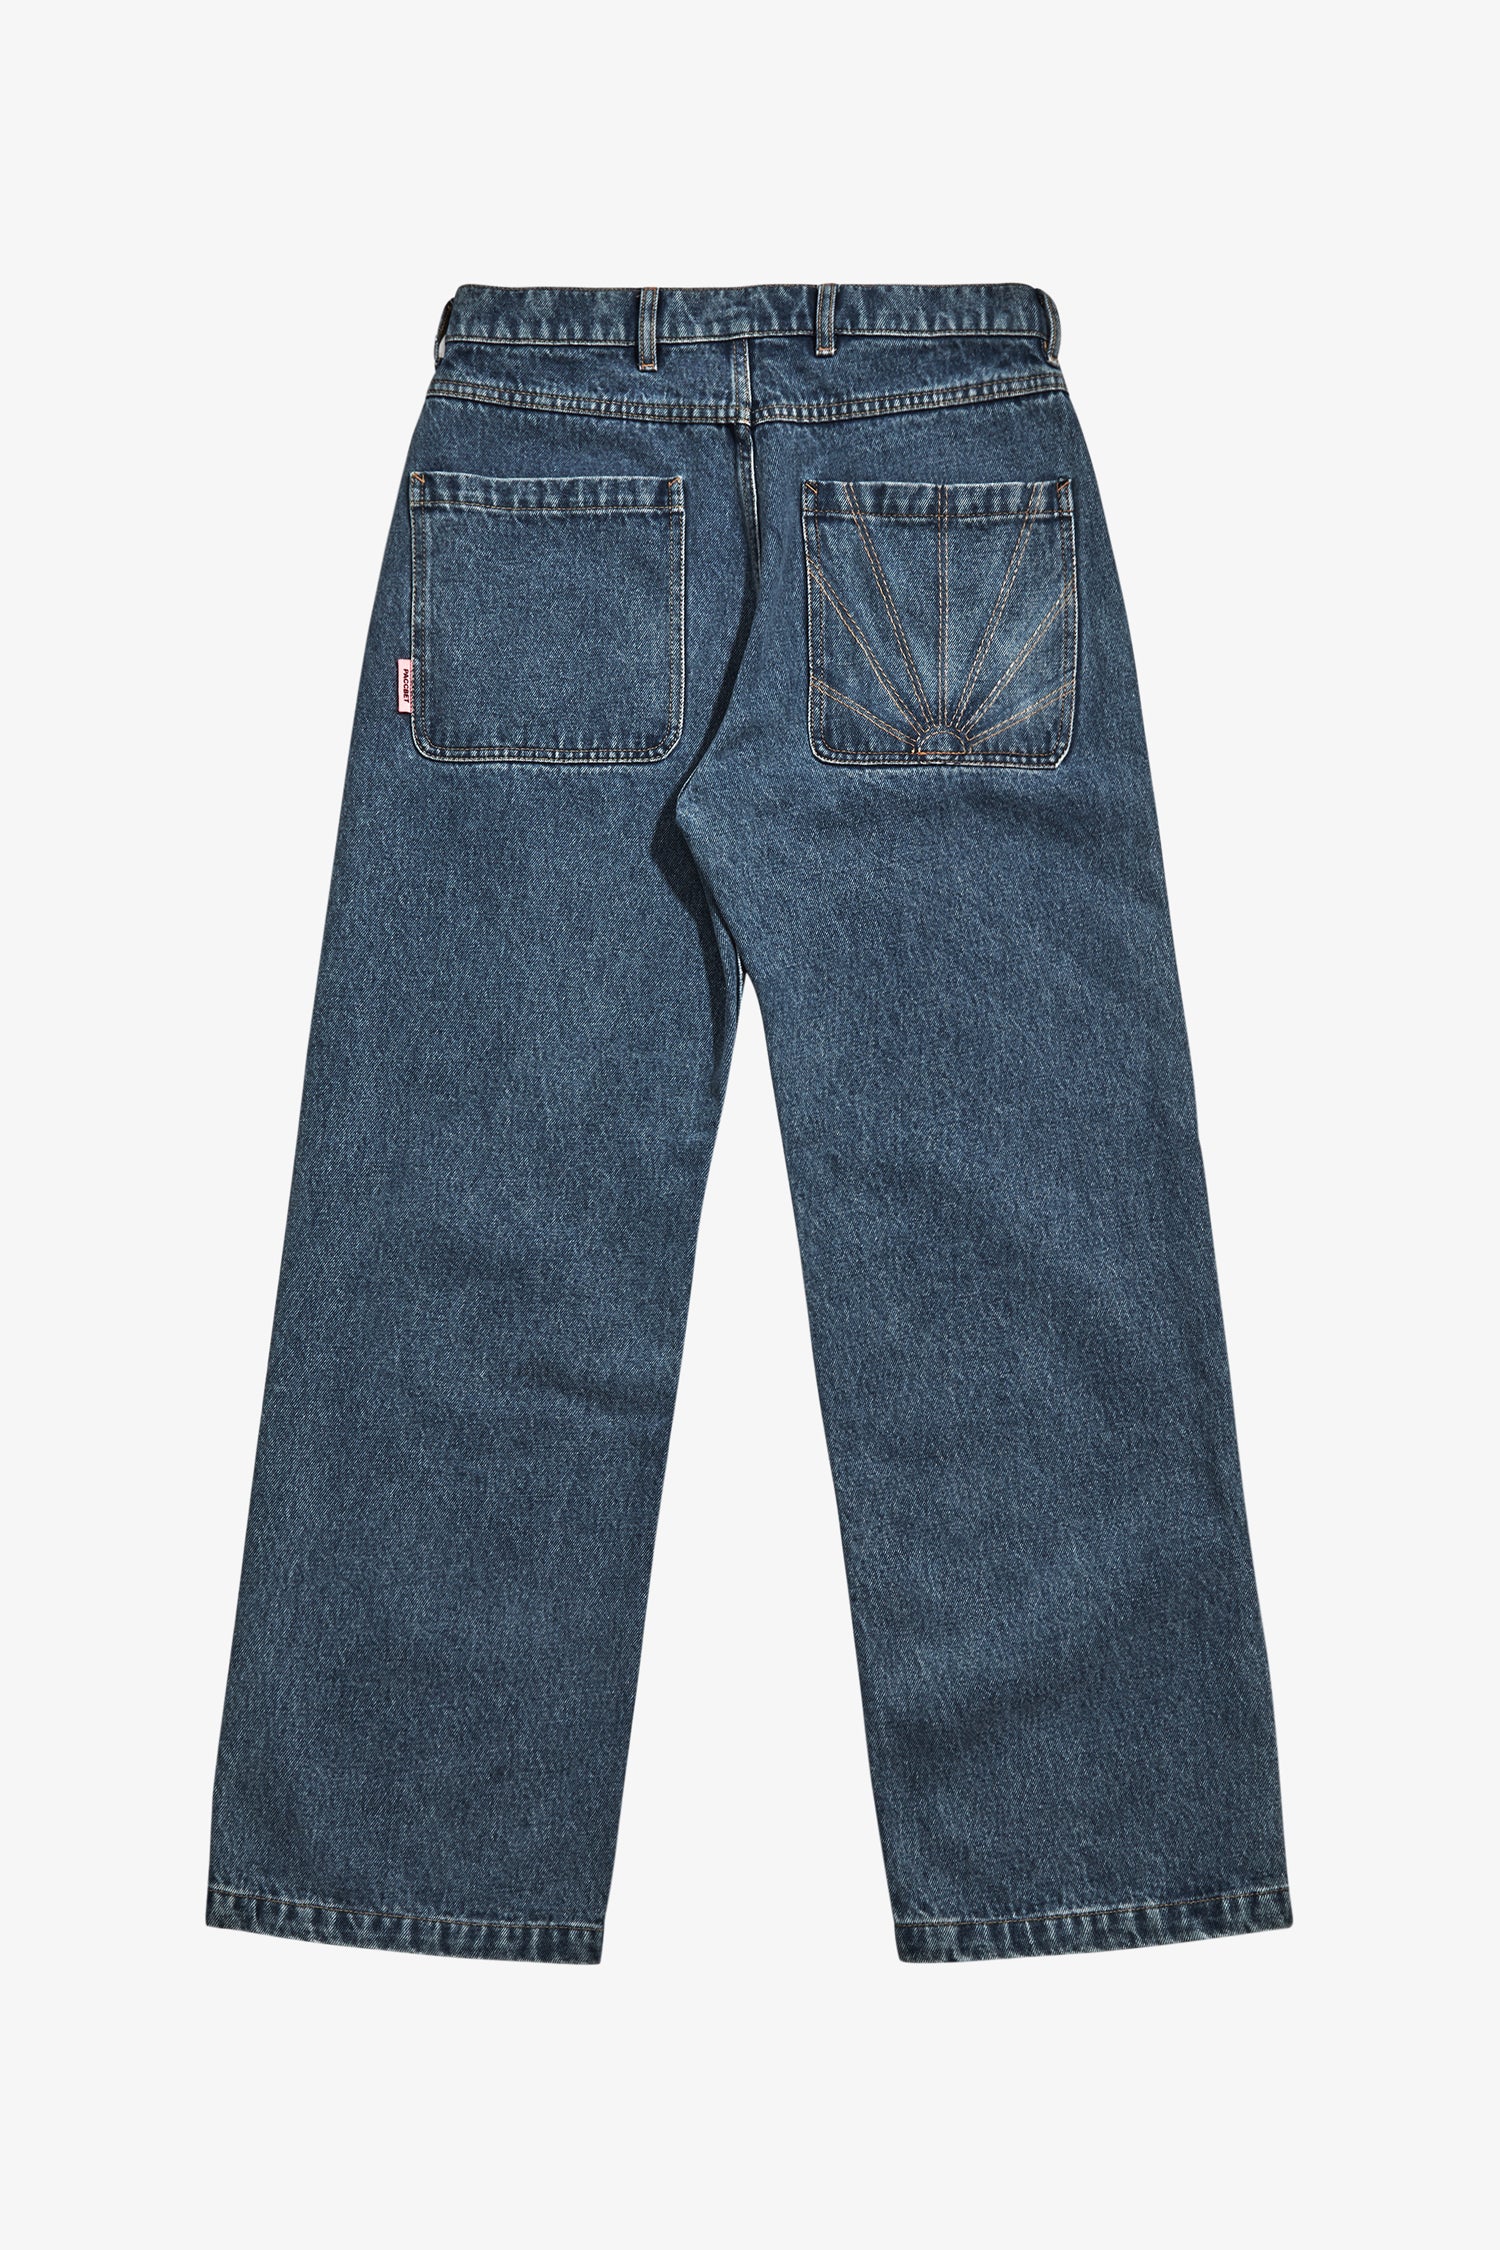 Selectshop FRAME - RASSVET Embroidered Wide-Leg Cropped Jeans Bottoms Dubai